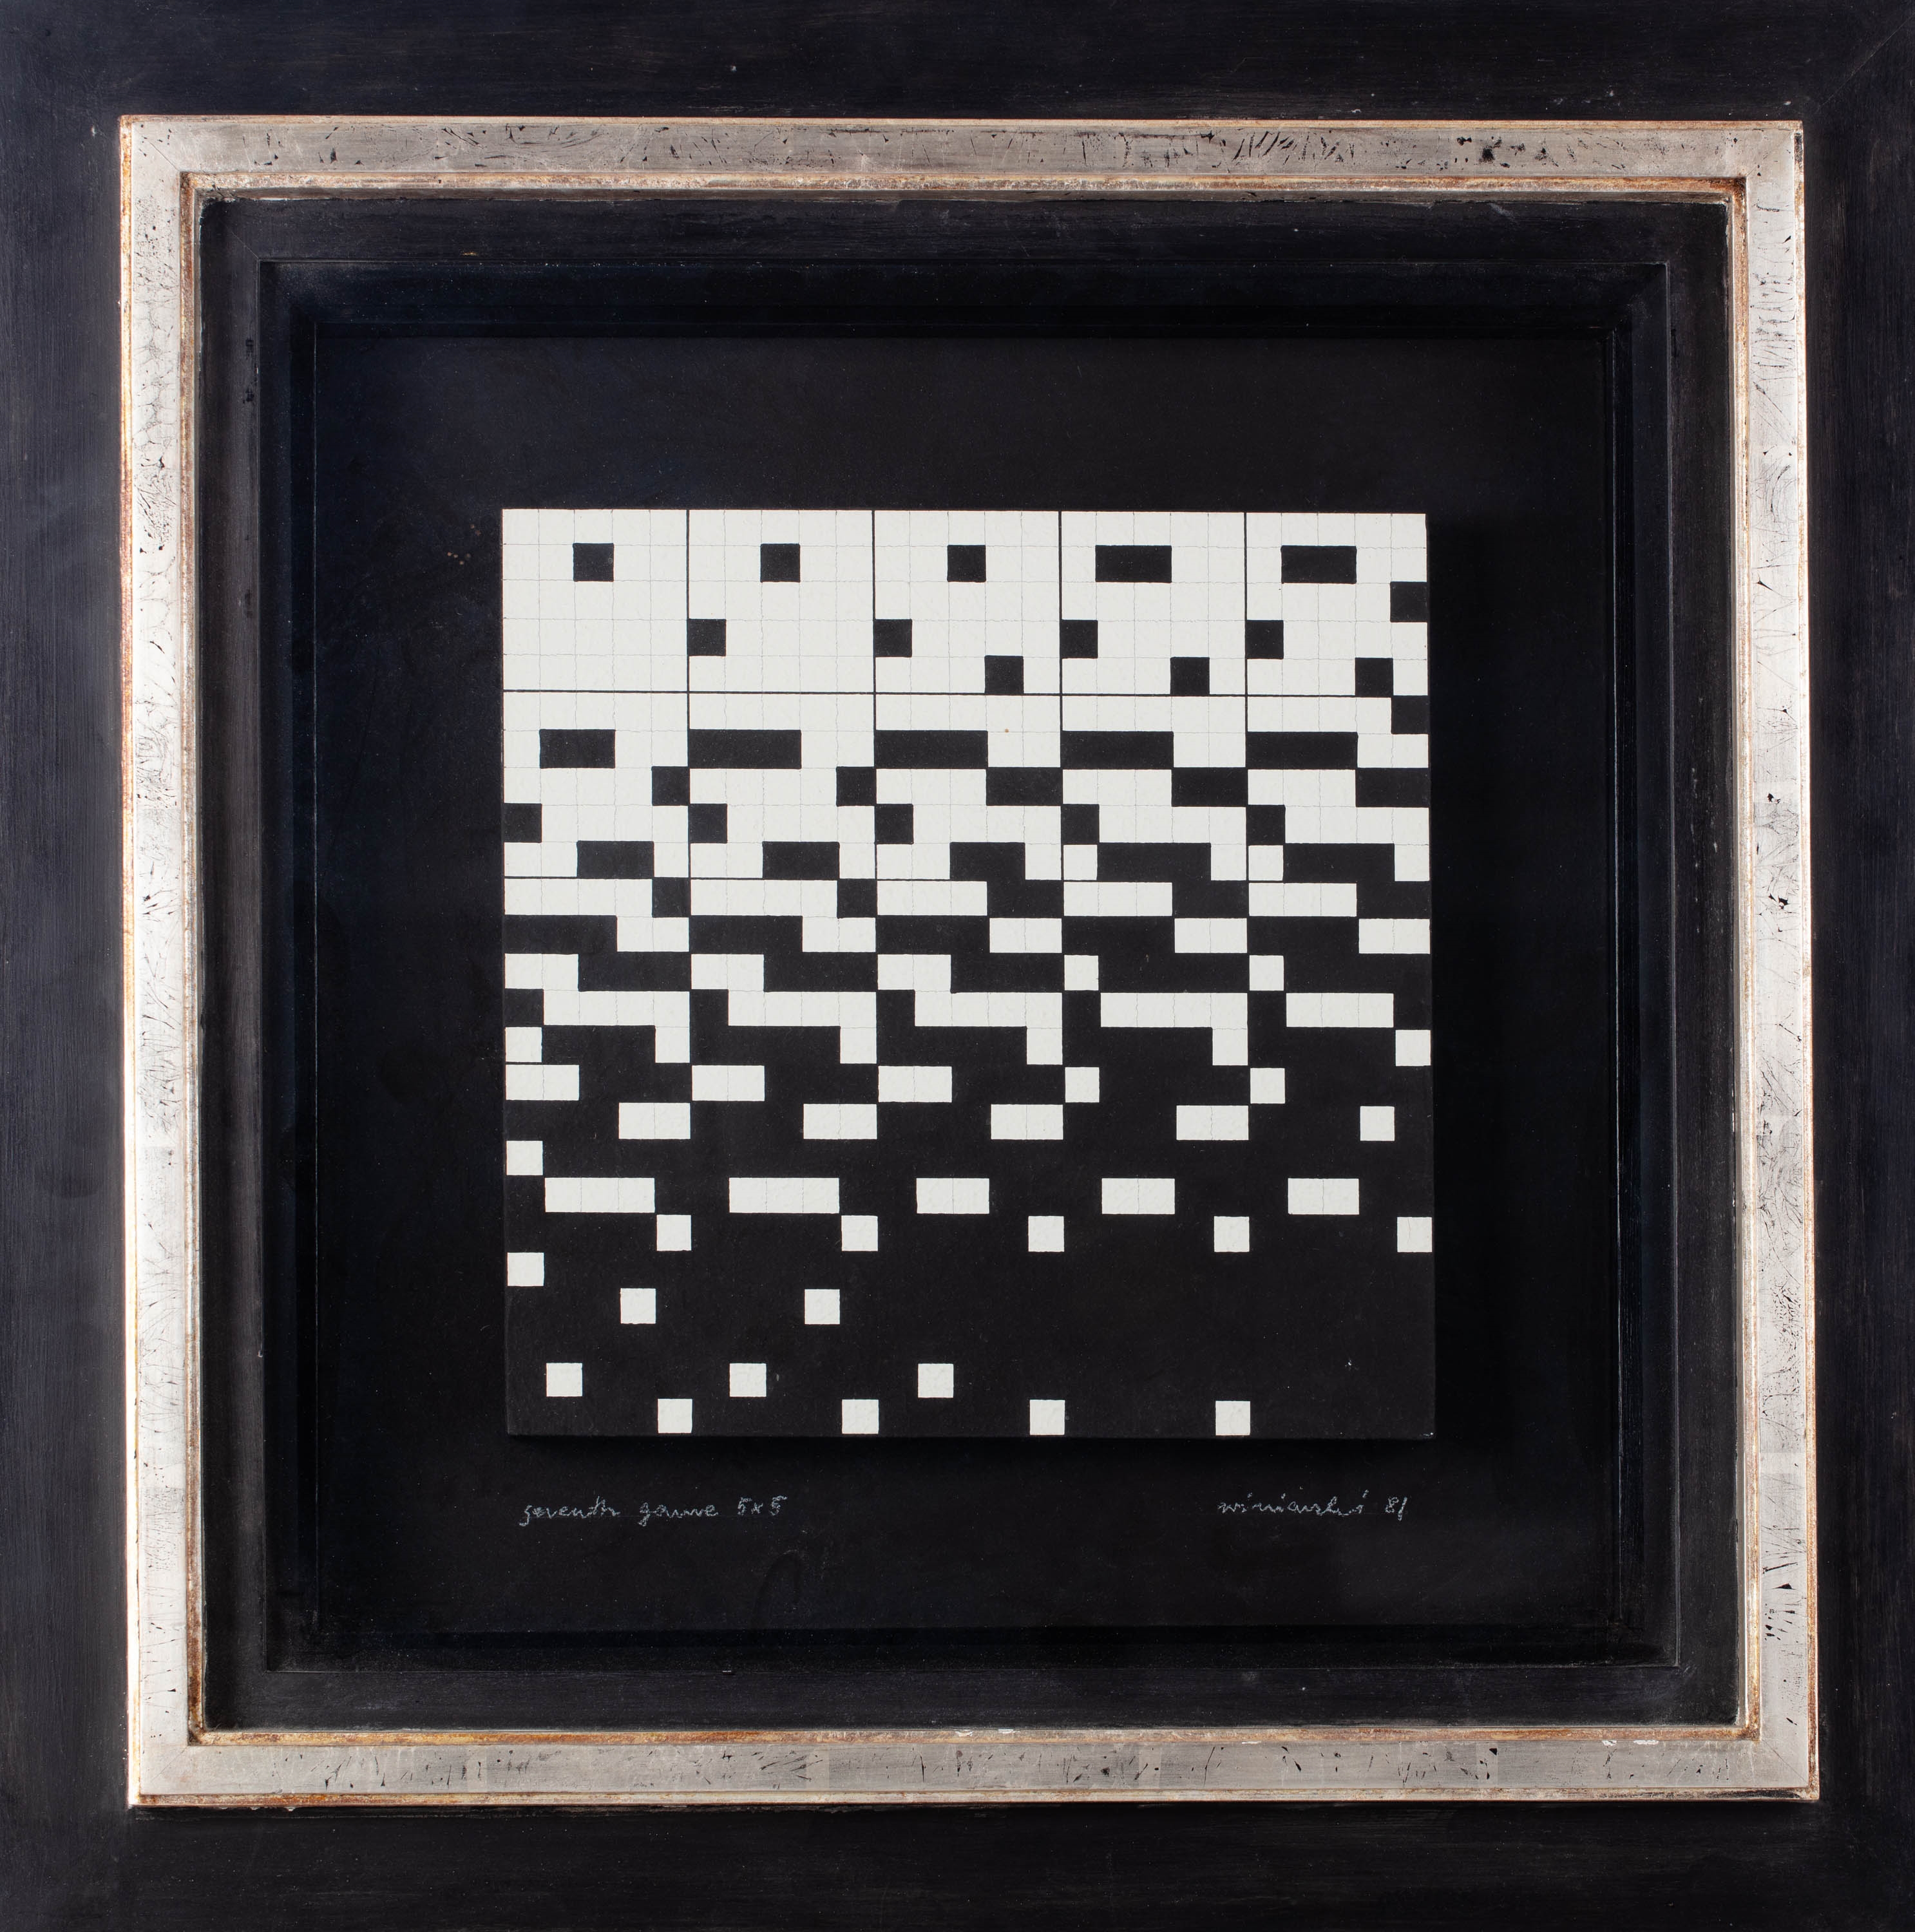 Artwork by Ryszard Winiarski, Seventh Game 5x5, 1981, Made of acrylic, board